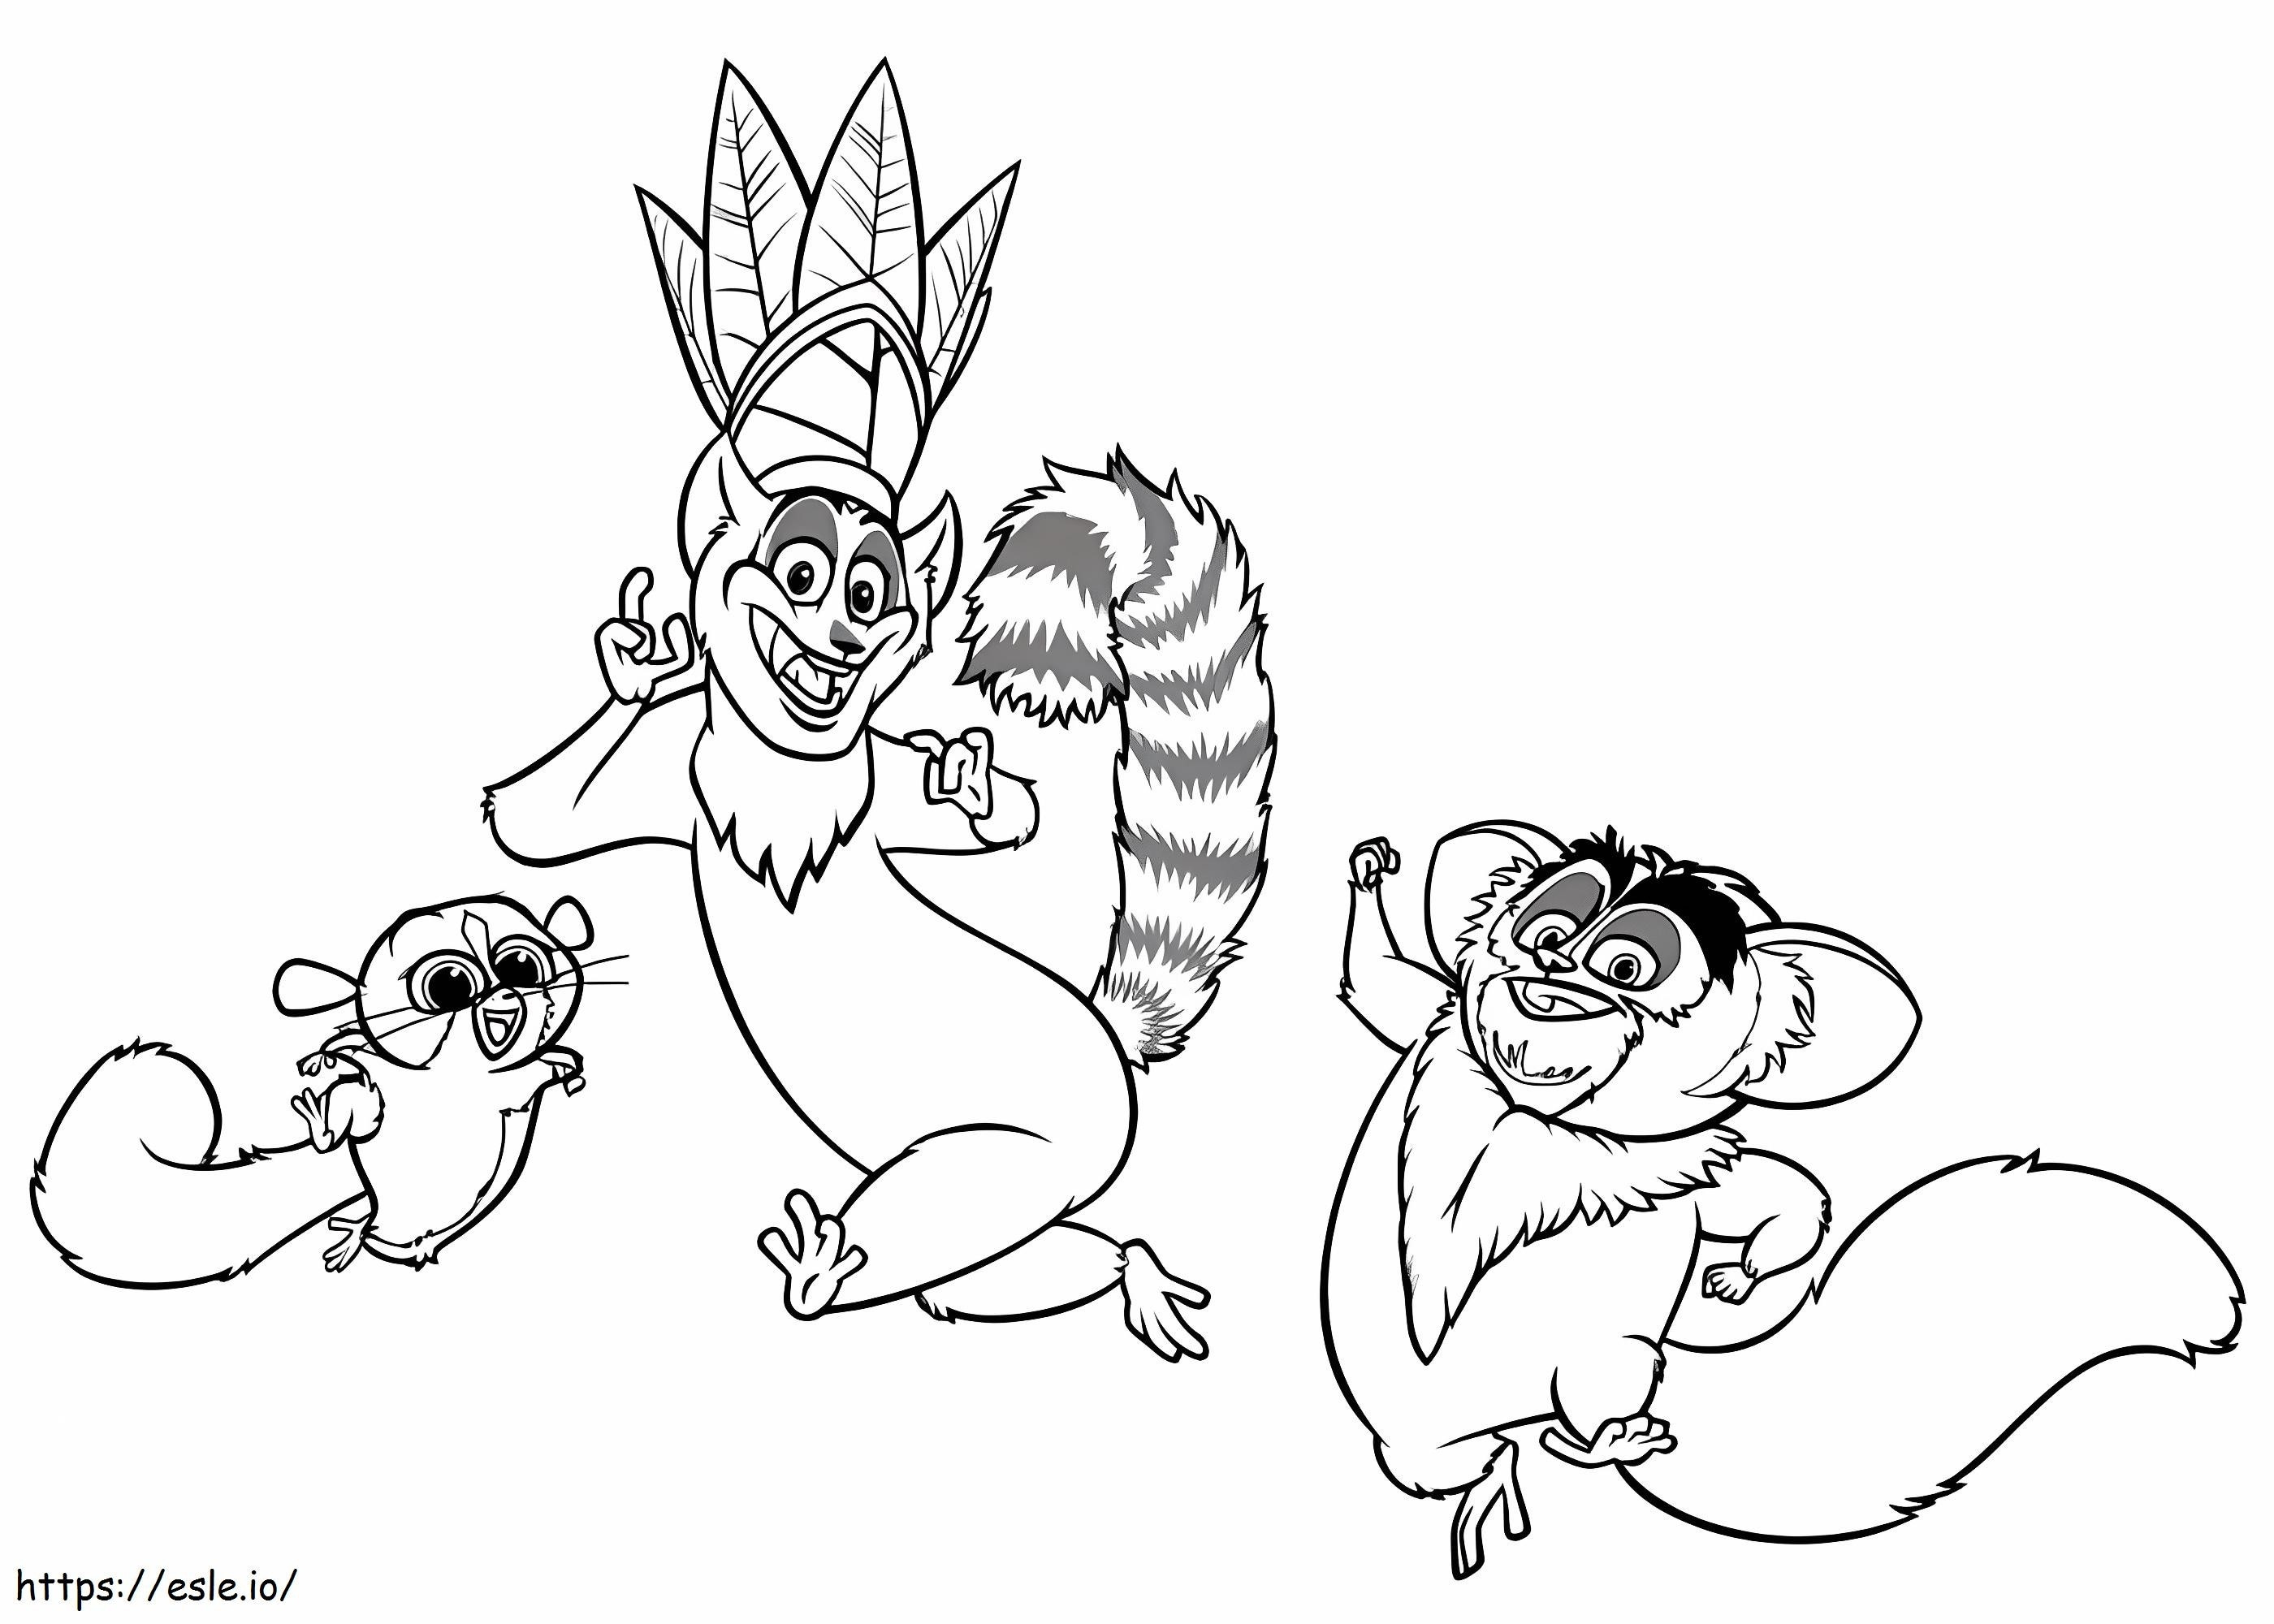 Tiga Kartun Lemur Gambar Mewarnai